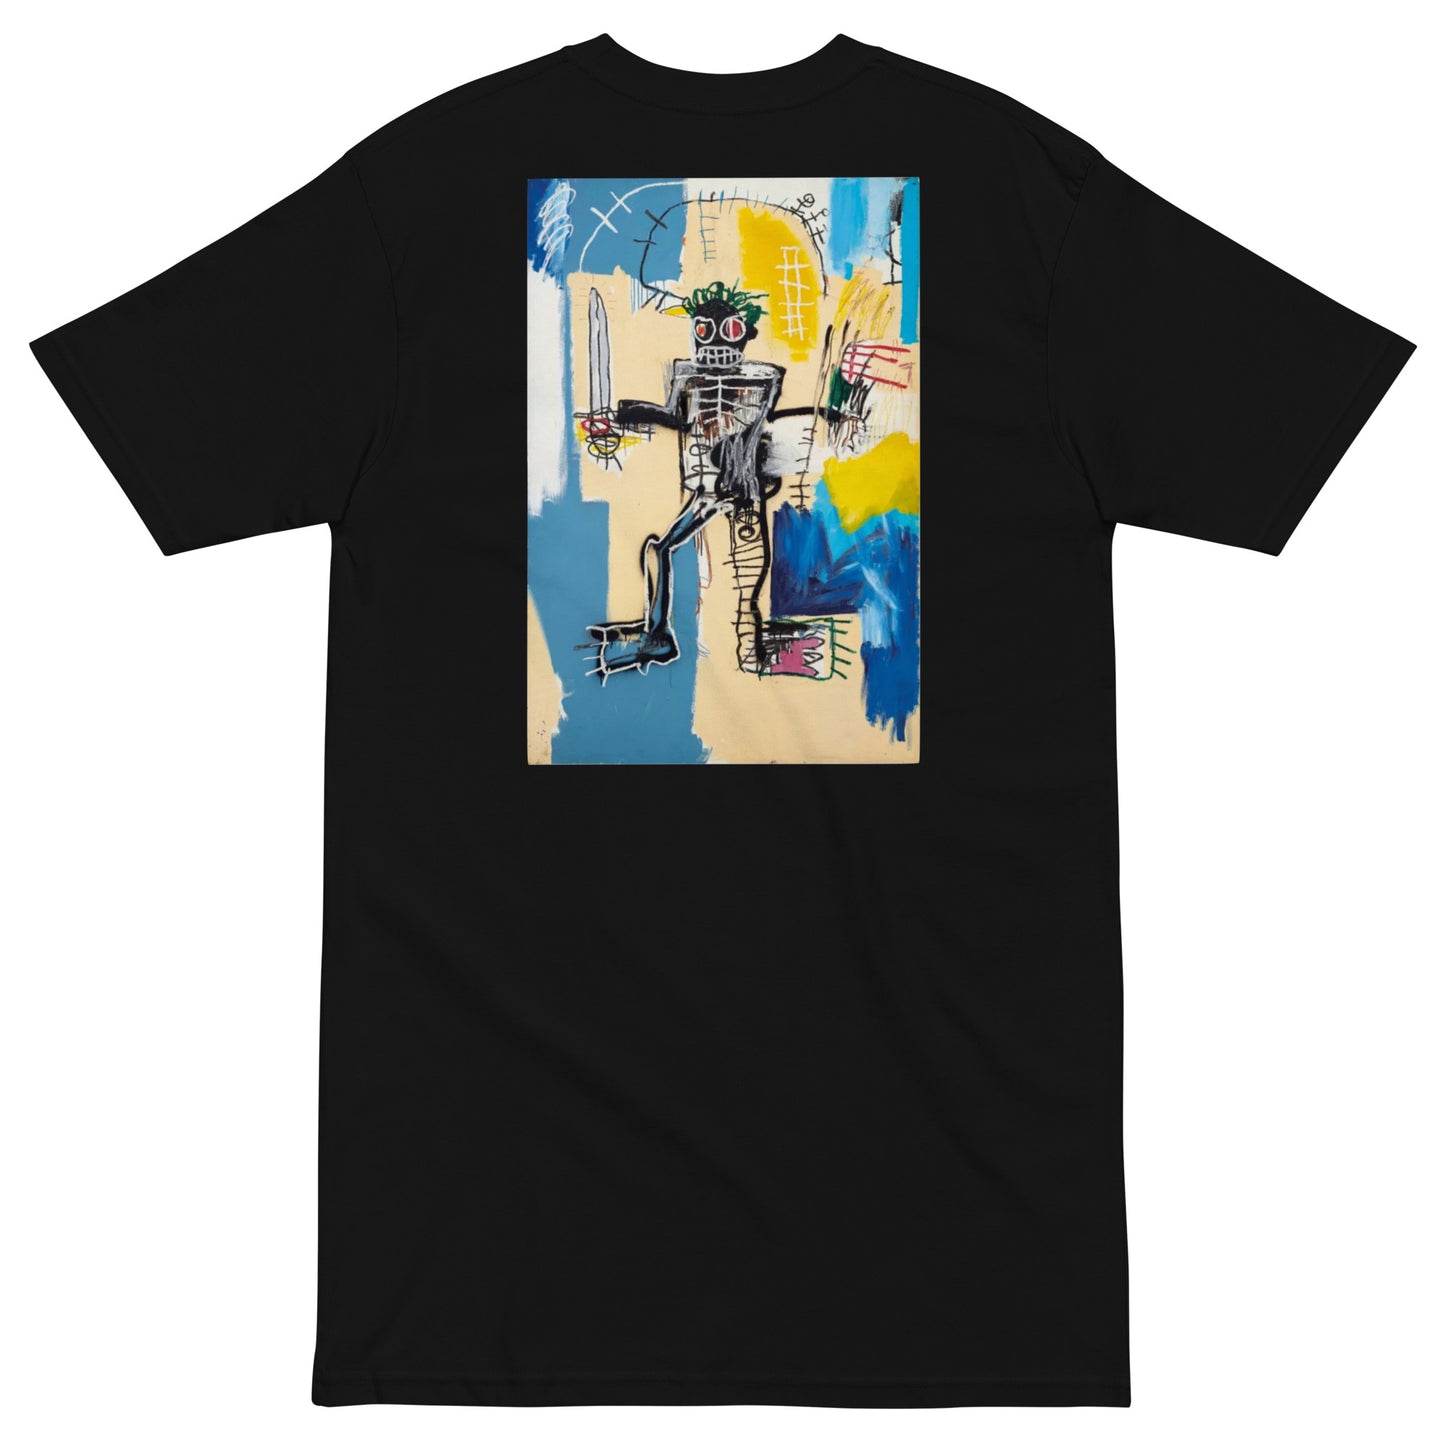 Jean-Michel Basquiat "Warrior" 1982 Artwork Embroidered + Printed Premium Streetwear T-shirt Black